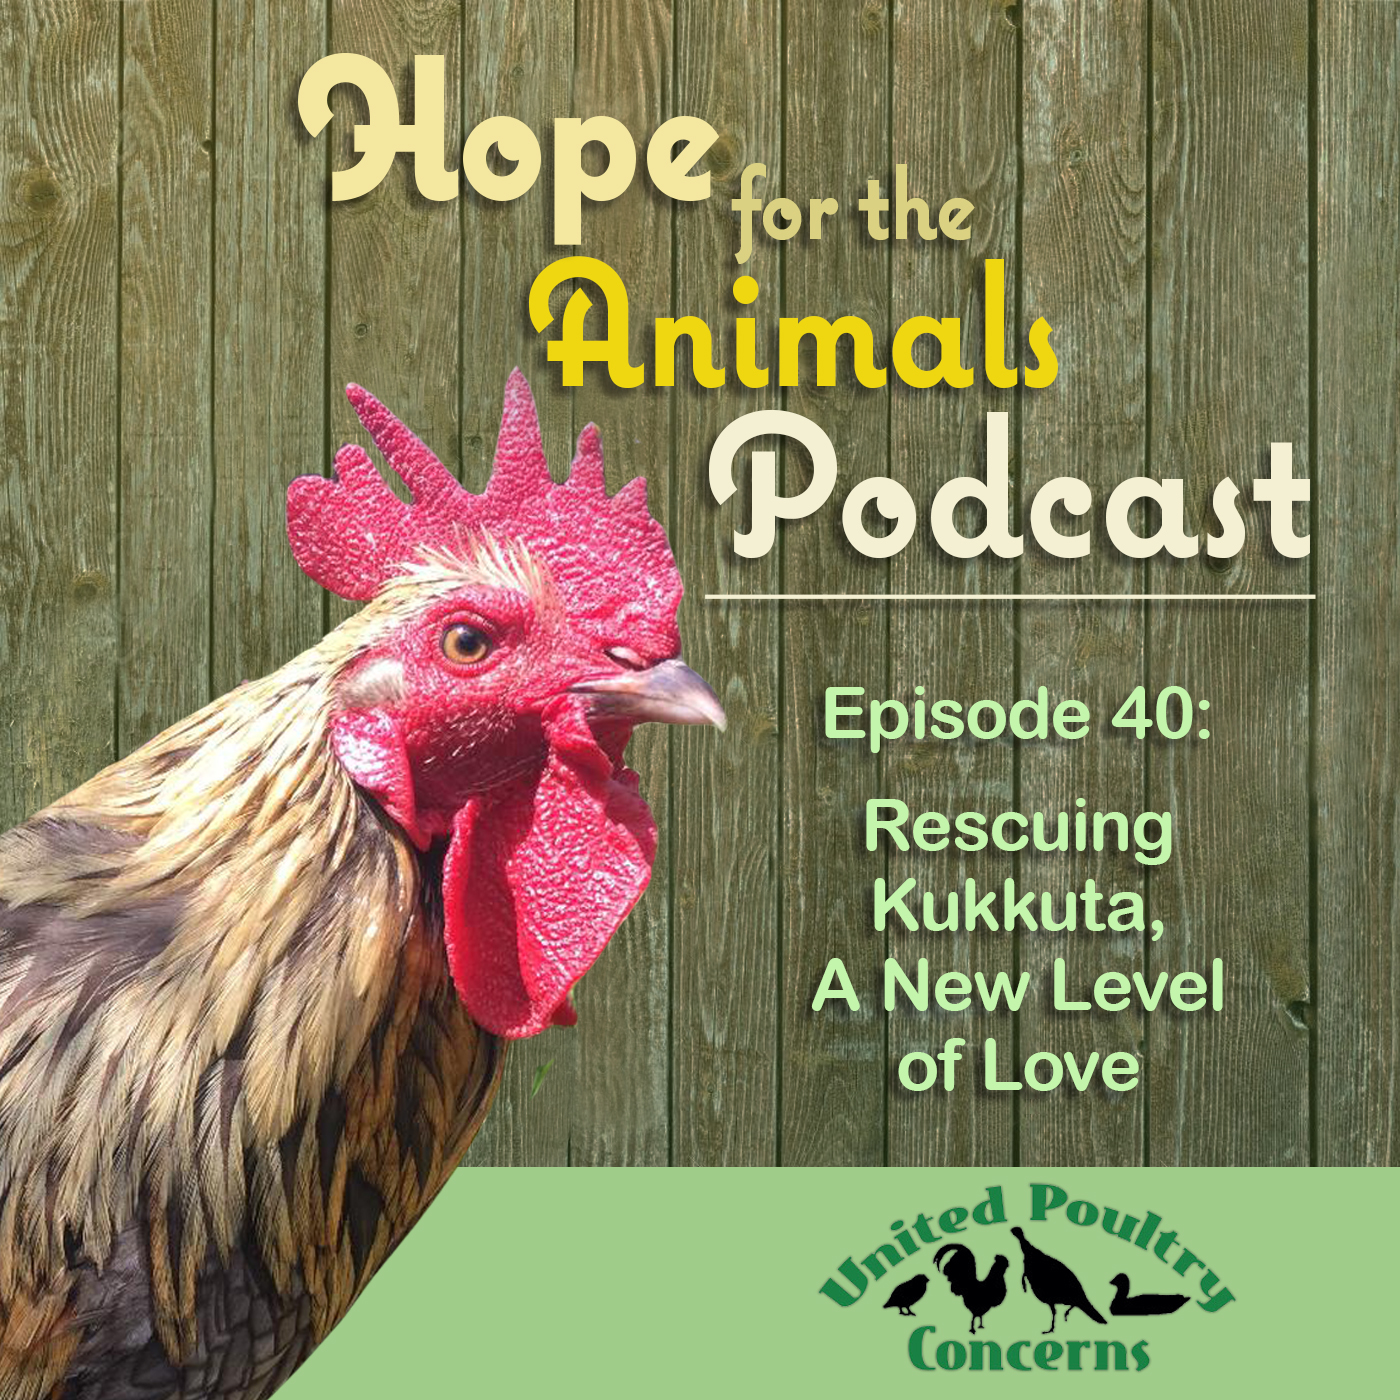 Episode 40: Rescuing Kukkuta: A New Level of Love